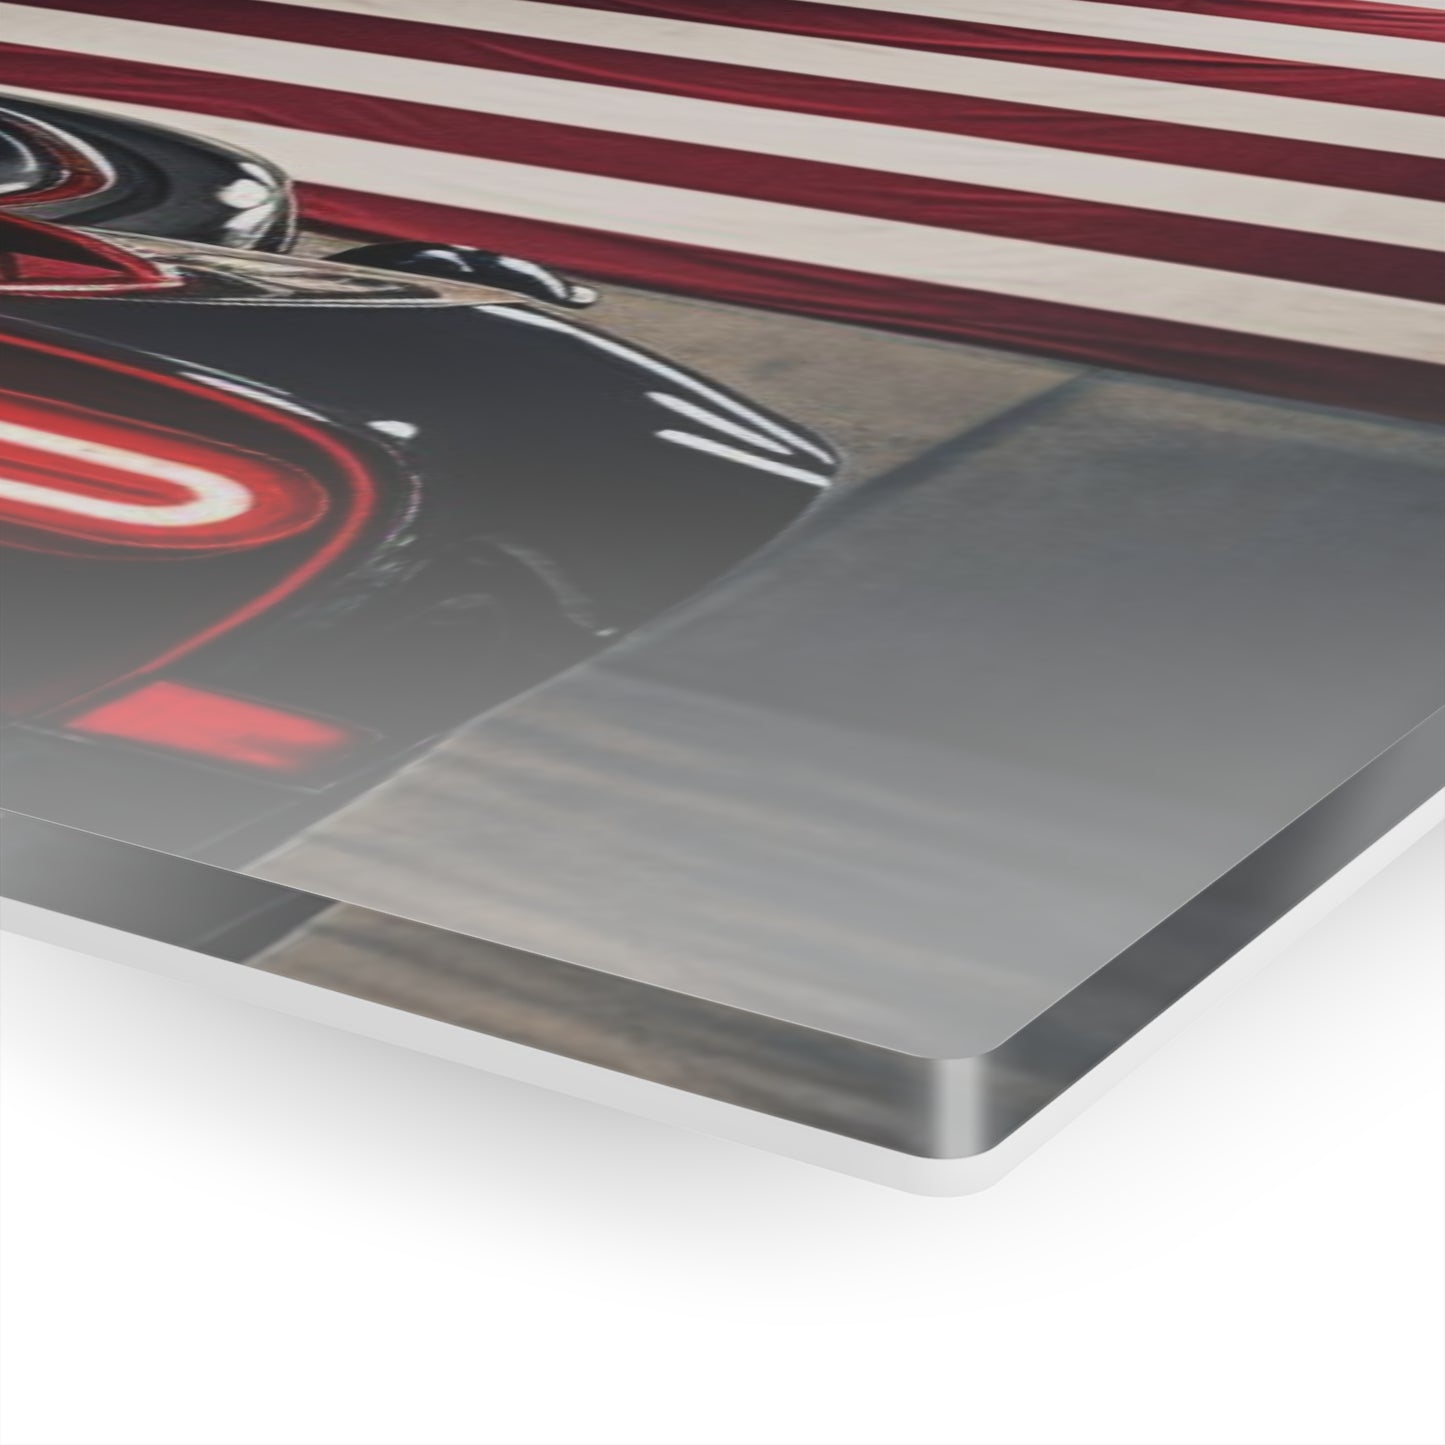 Acrylic Prints American Flag Background Bugatti 5